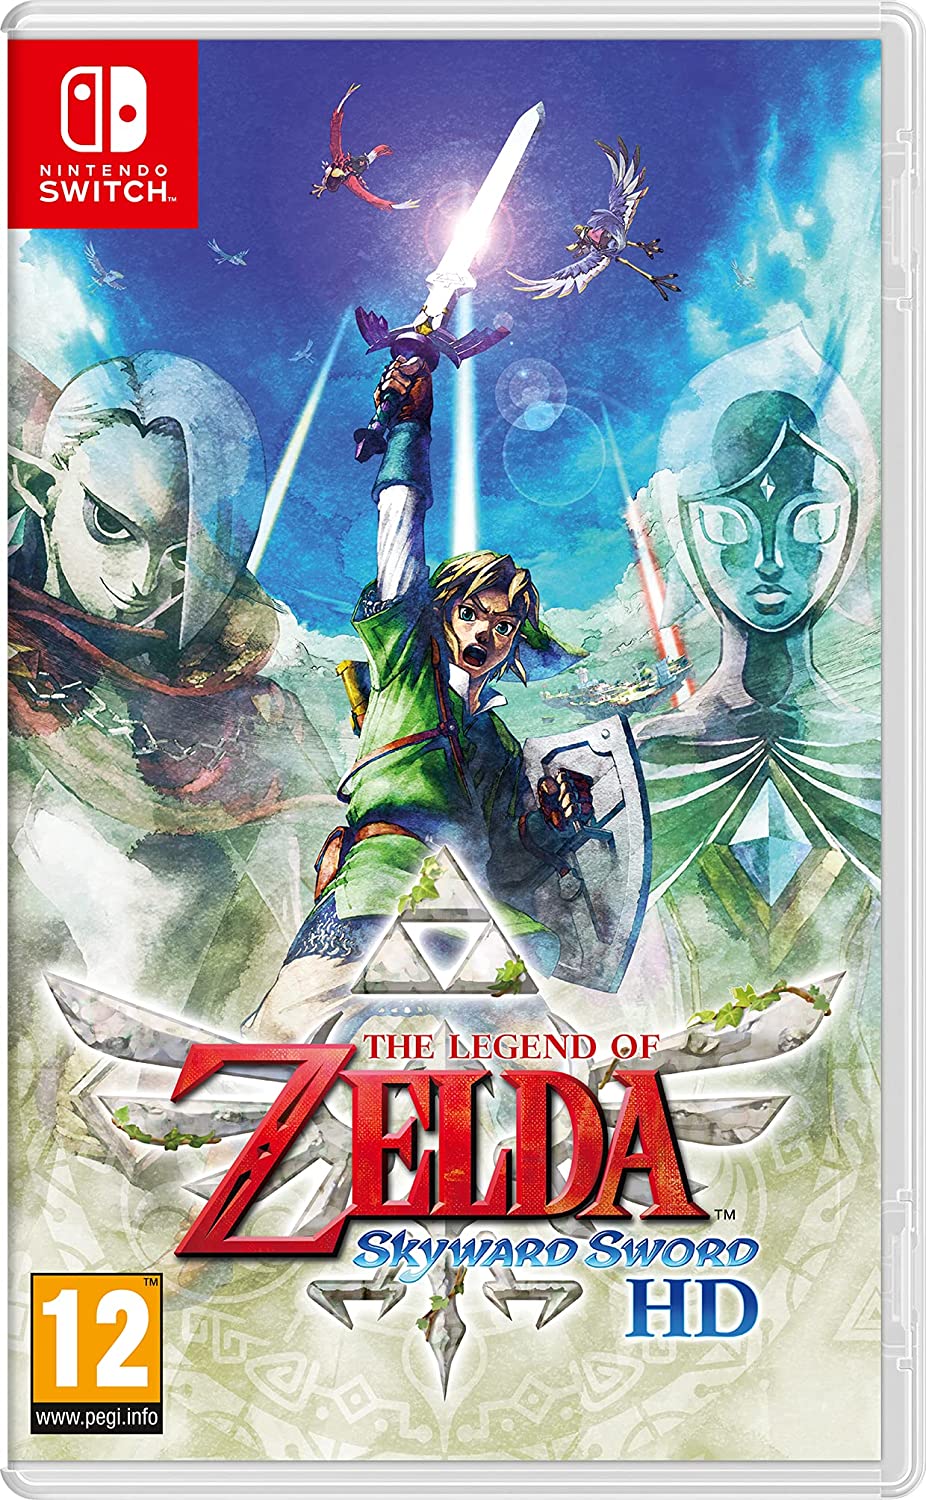 Couverture de The Legend of Zelda : Skyward Sword.